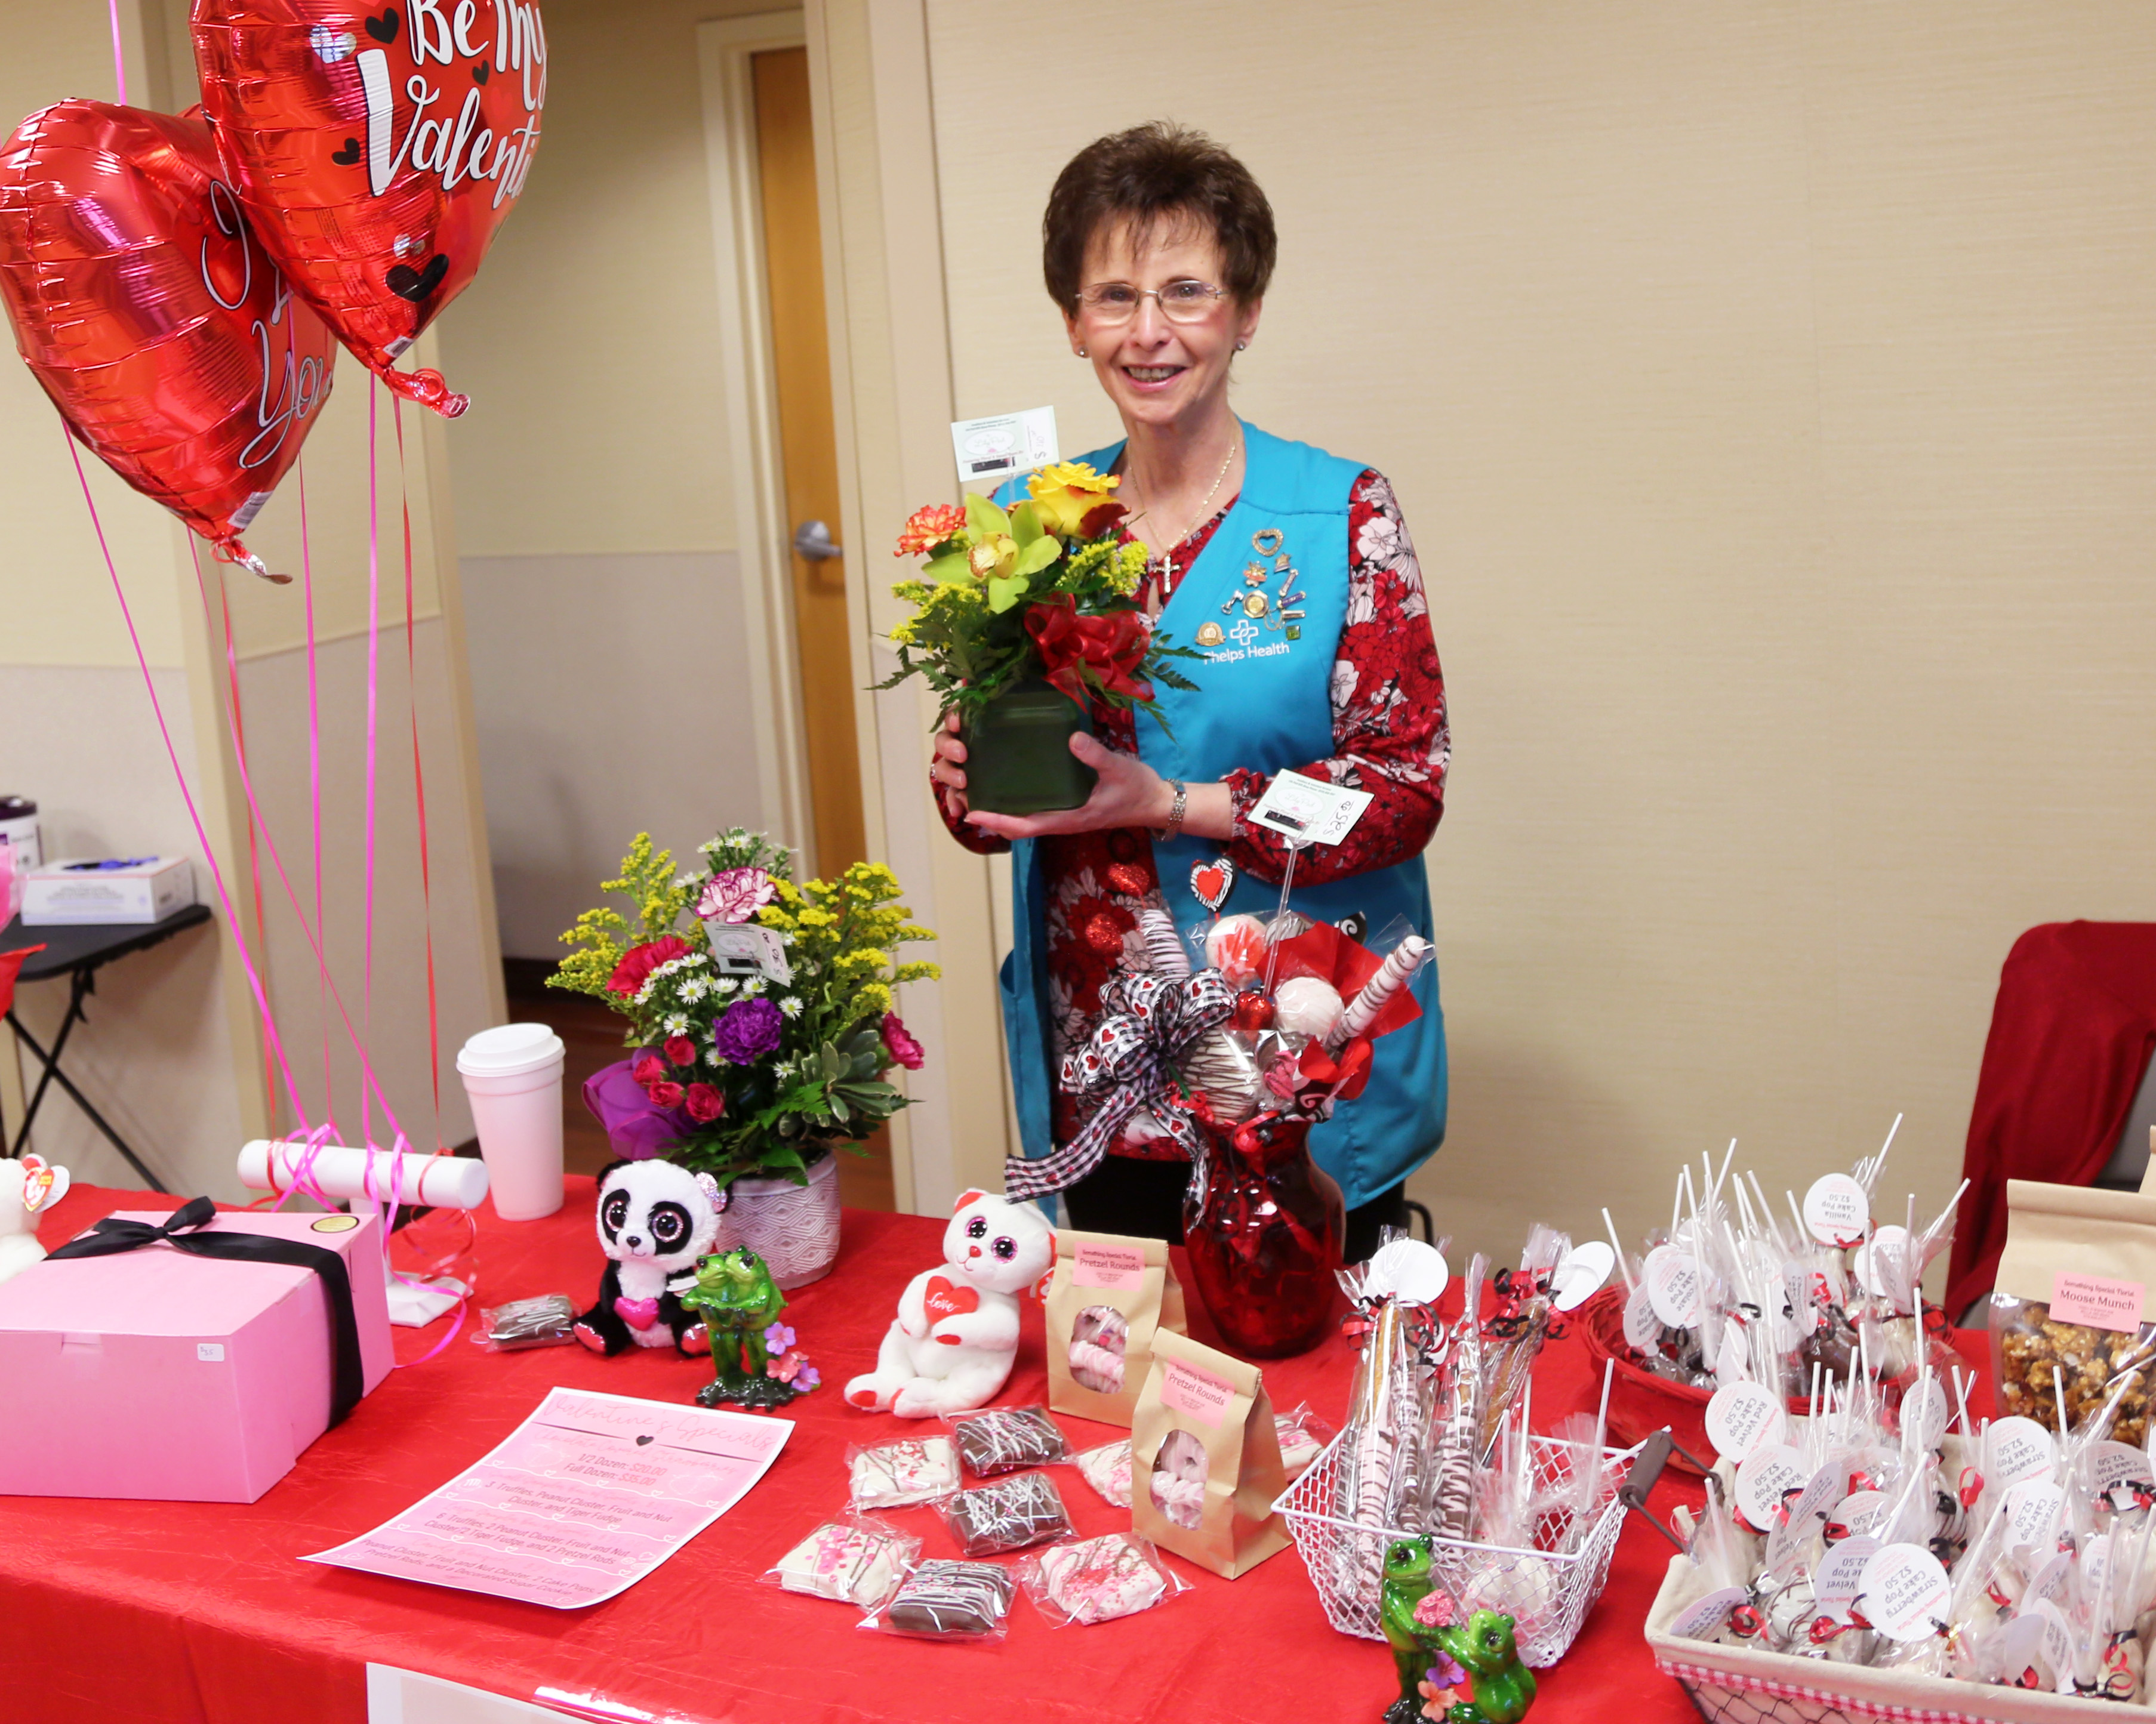 Julie Schmidt with Valentine's day gifts